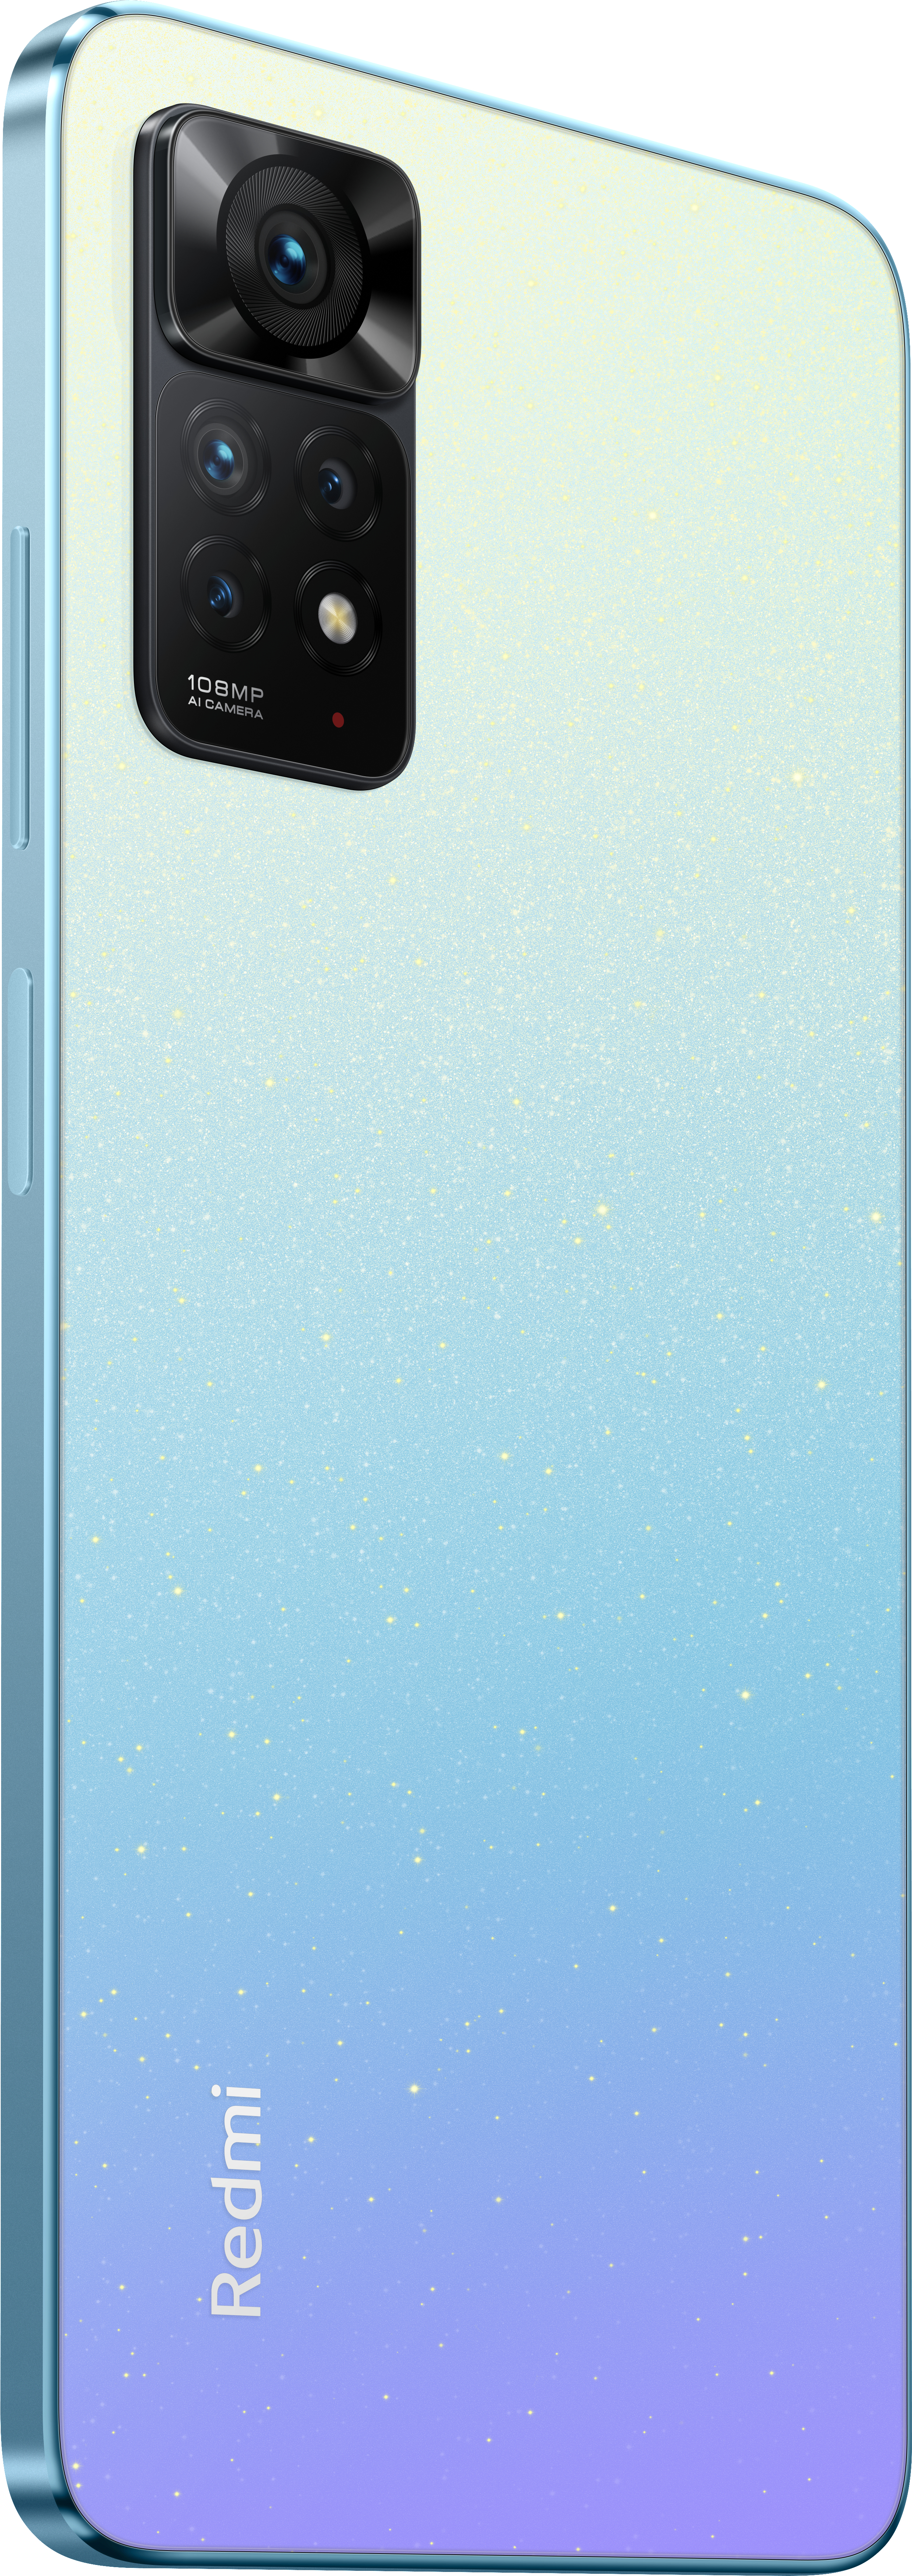 GB XIAOMI SIM 11 Star Blue Redmi Pro 128 Note Dual